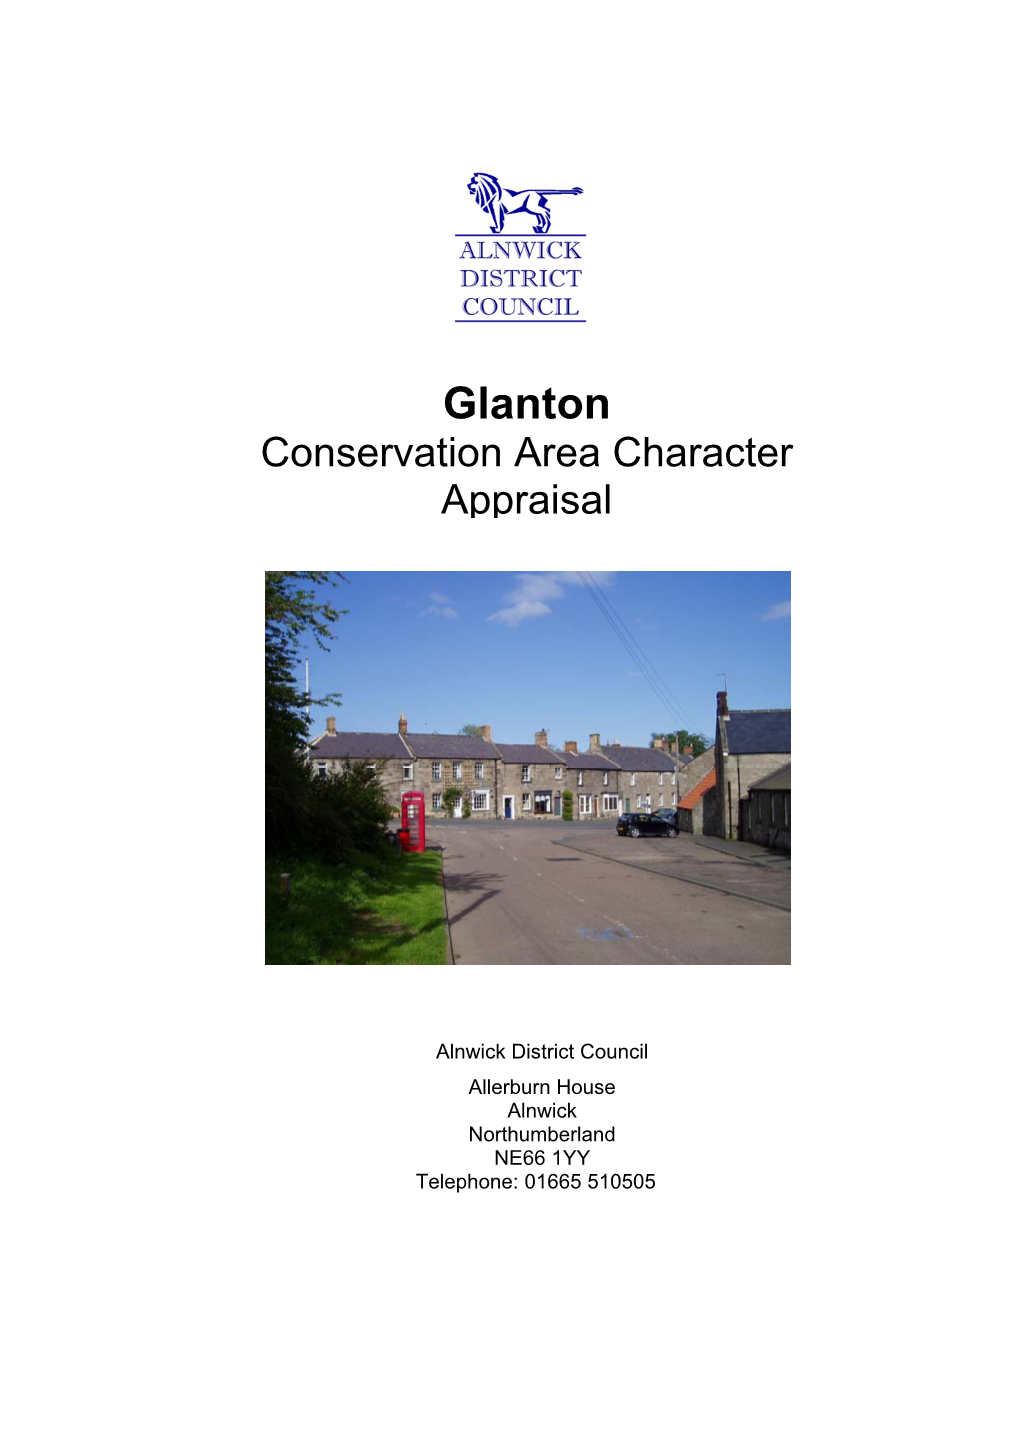 Glanton Conservation Area Character Appraisal